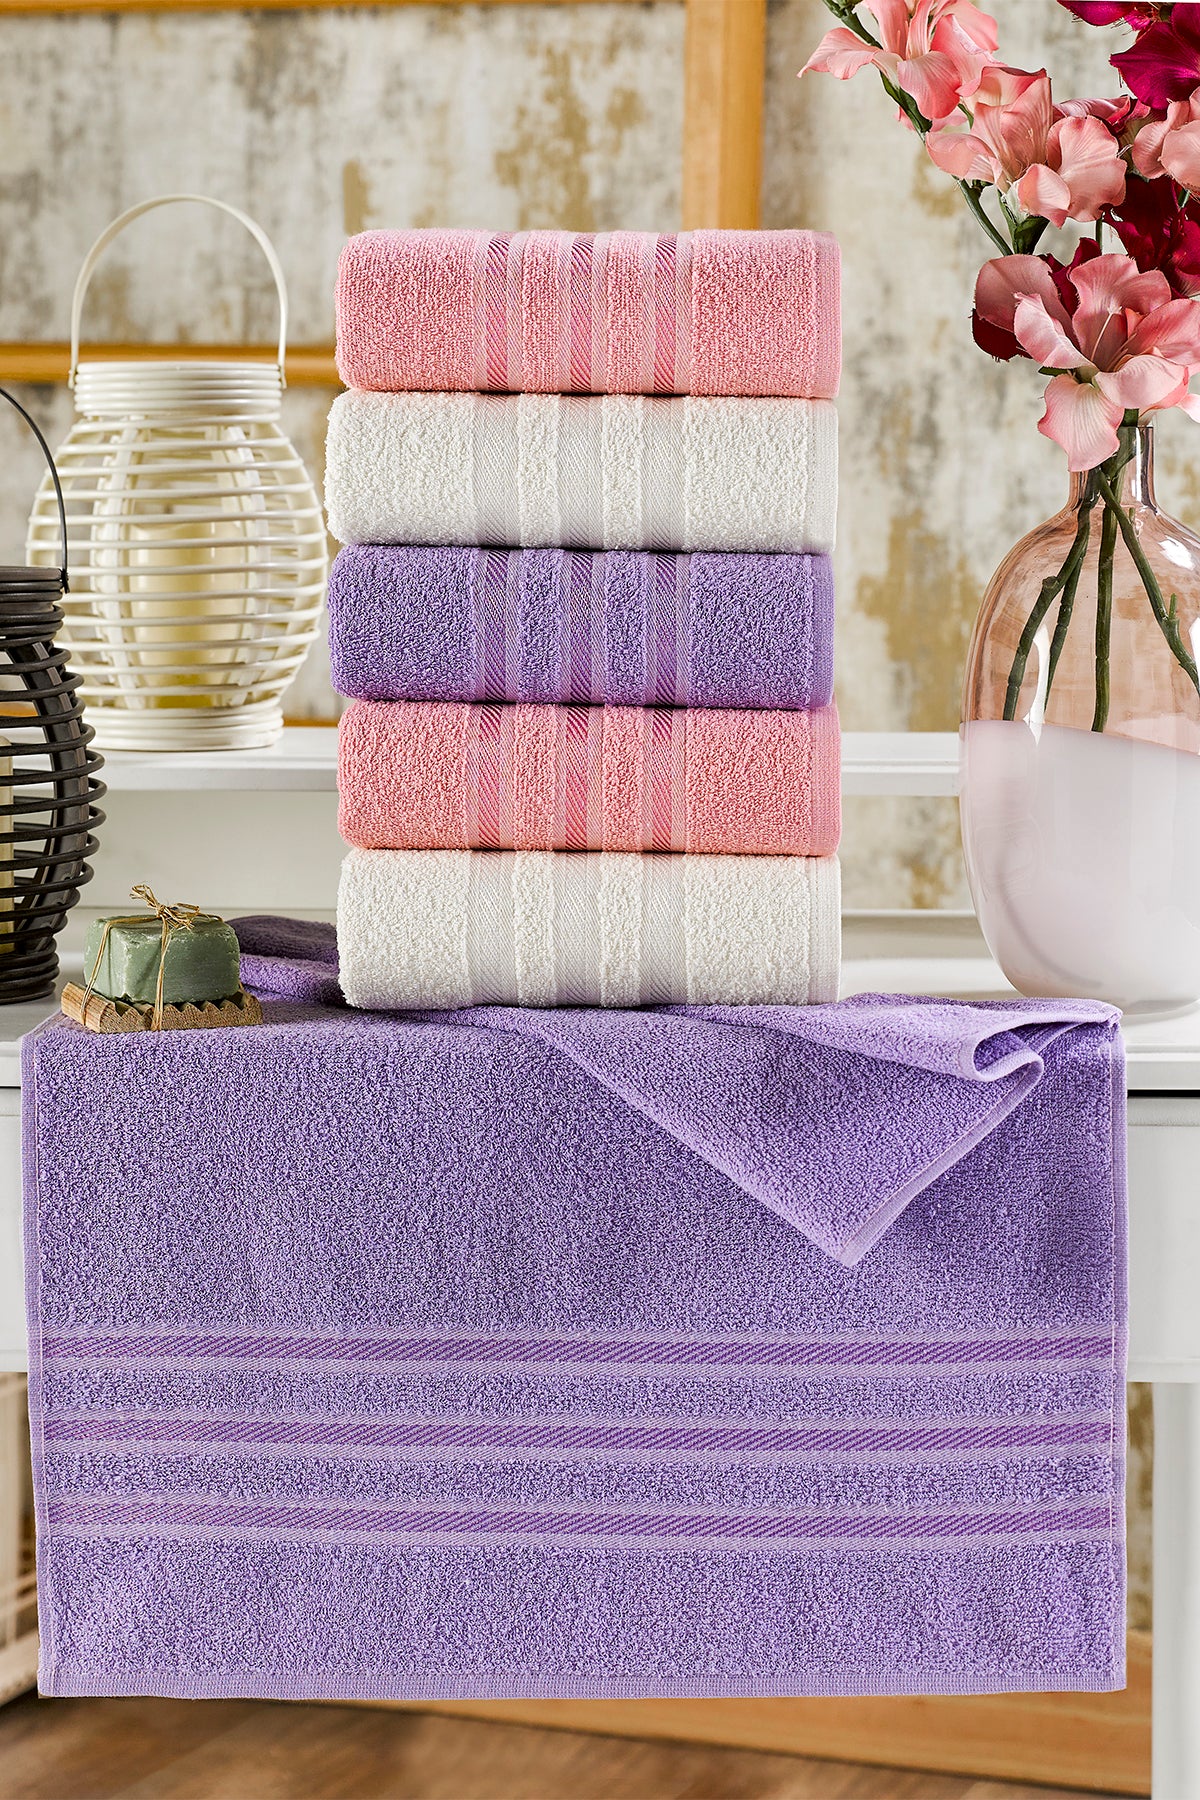 Elevate Your Bathroom with Semecca's Lia Bordürü 6-Piece Towel Set in Blush, Powder, and Cream